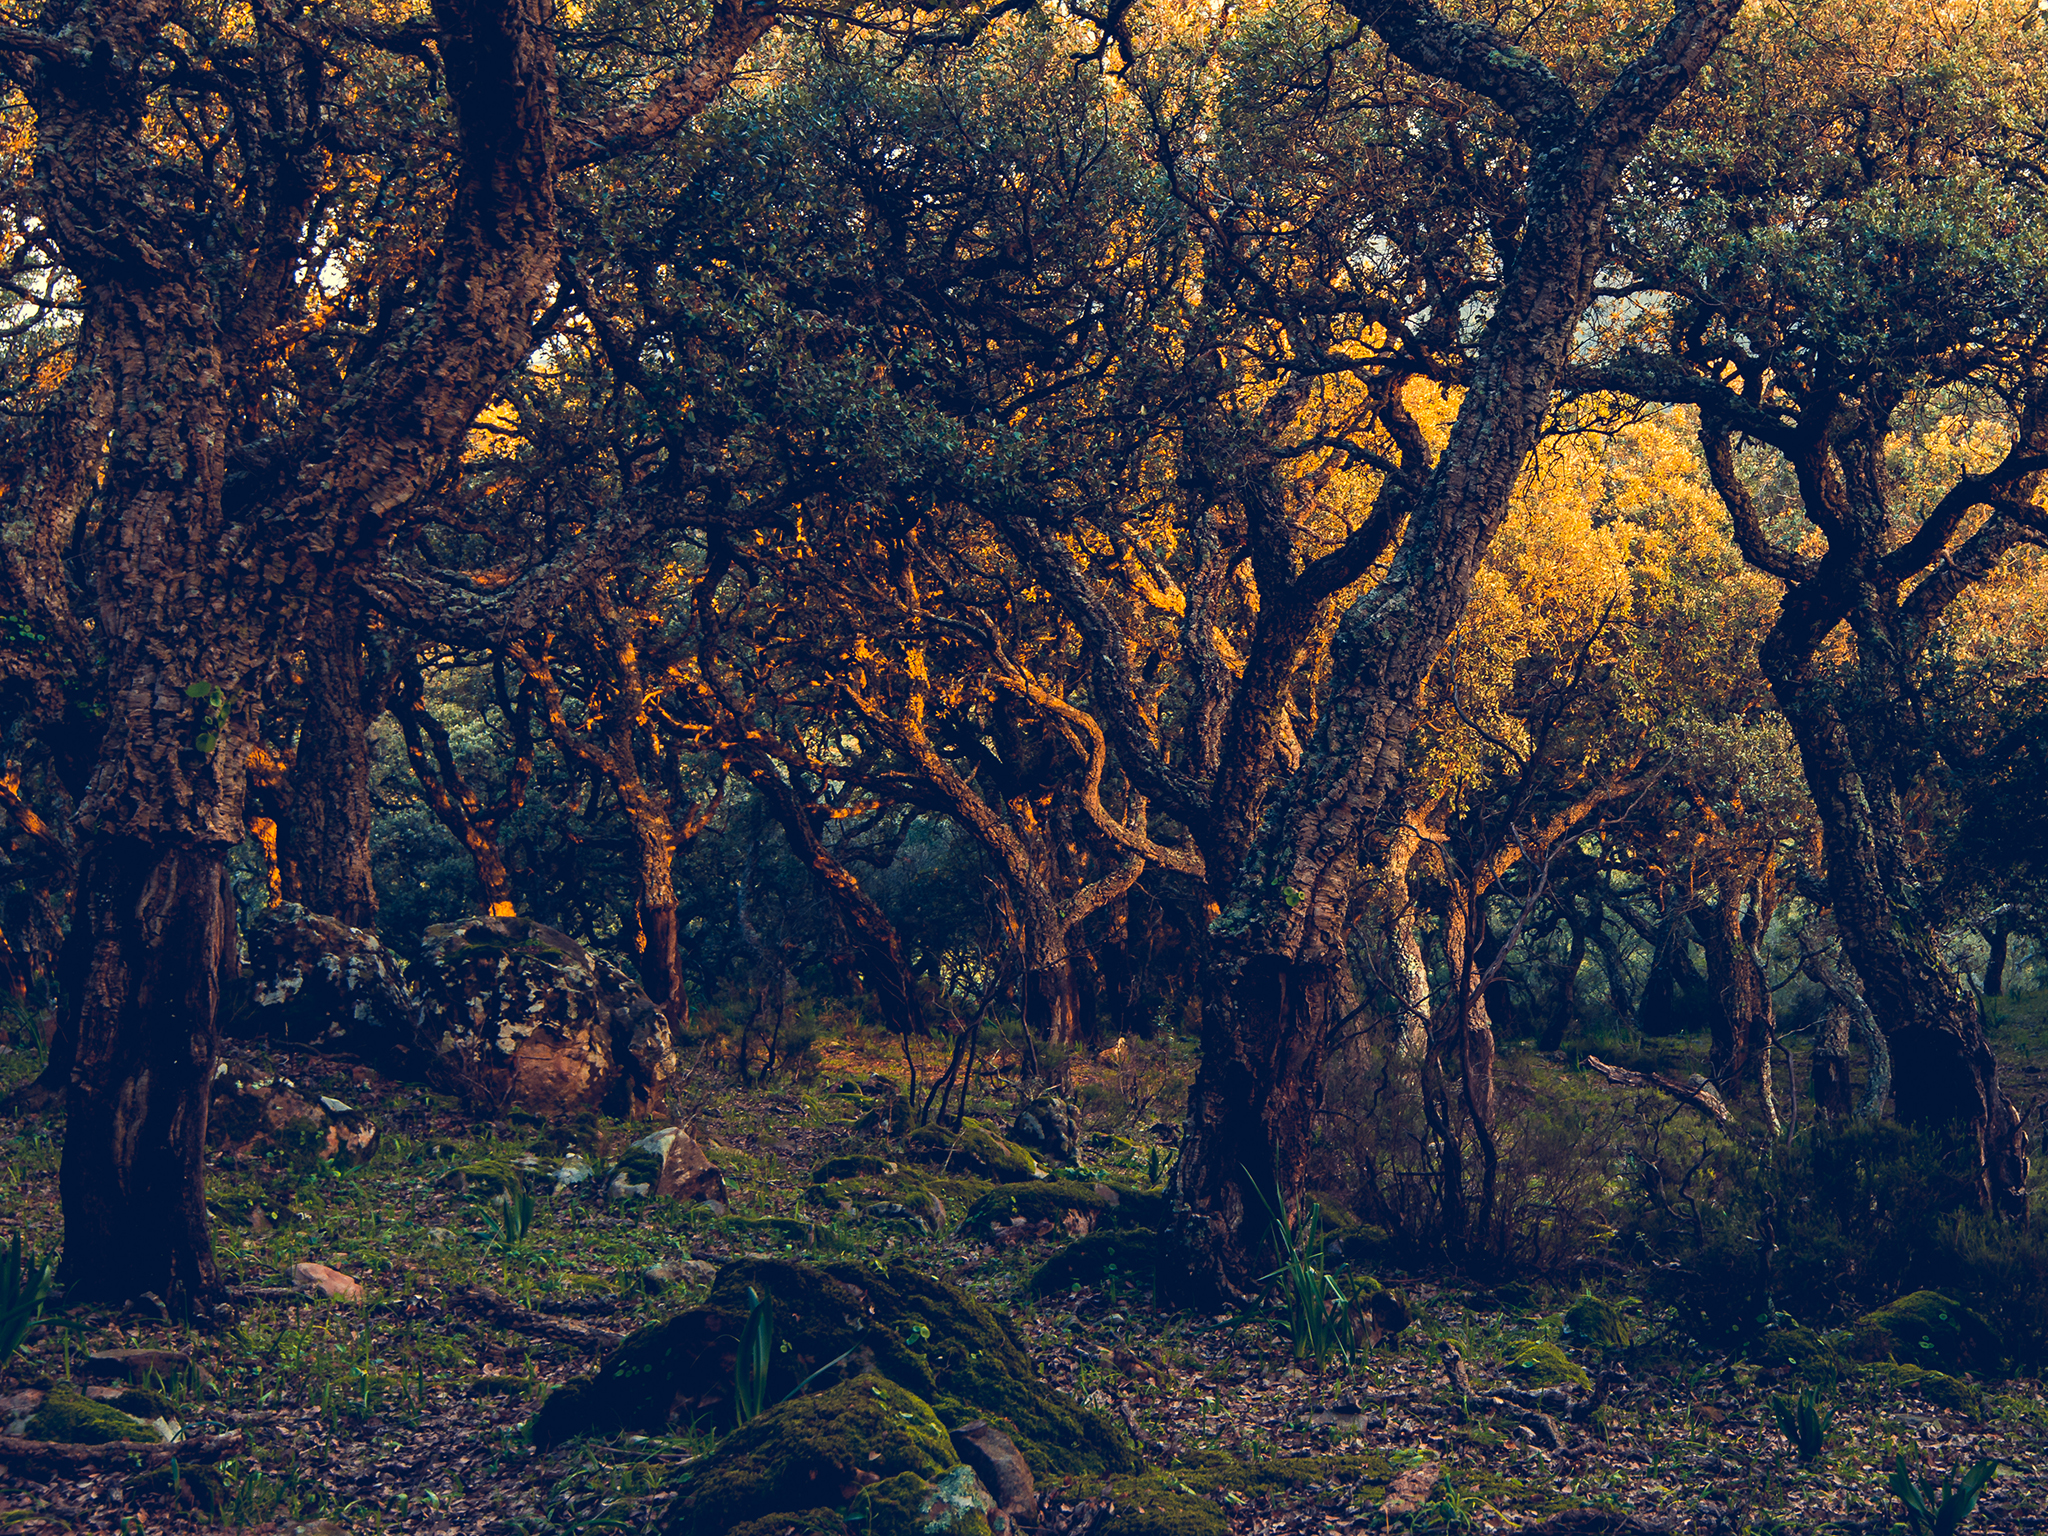 Trollsk ekskog fotograferad i Andalusien av Anja Baklien på fotoresa med Wild Nature fotoresor.